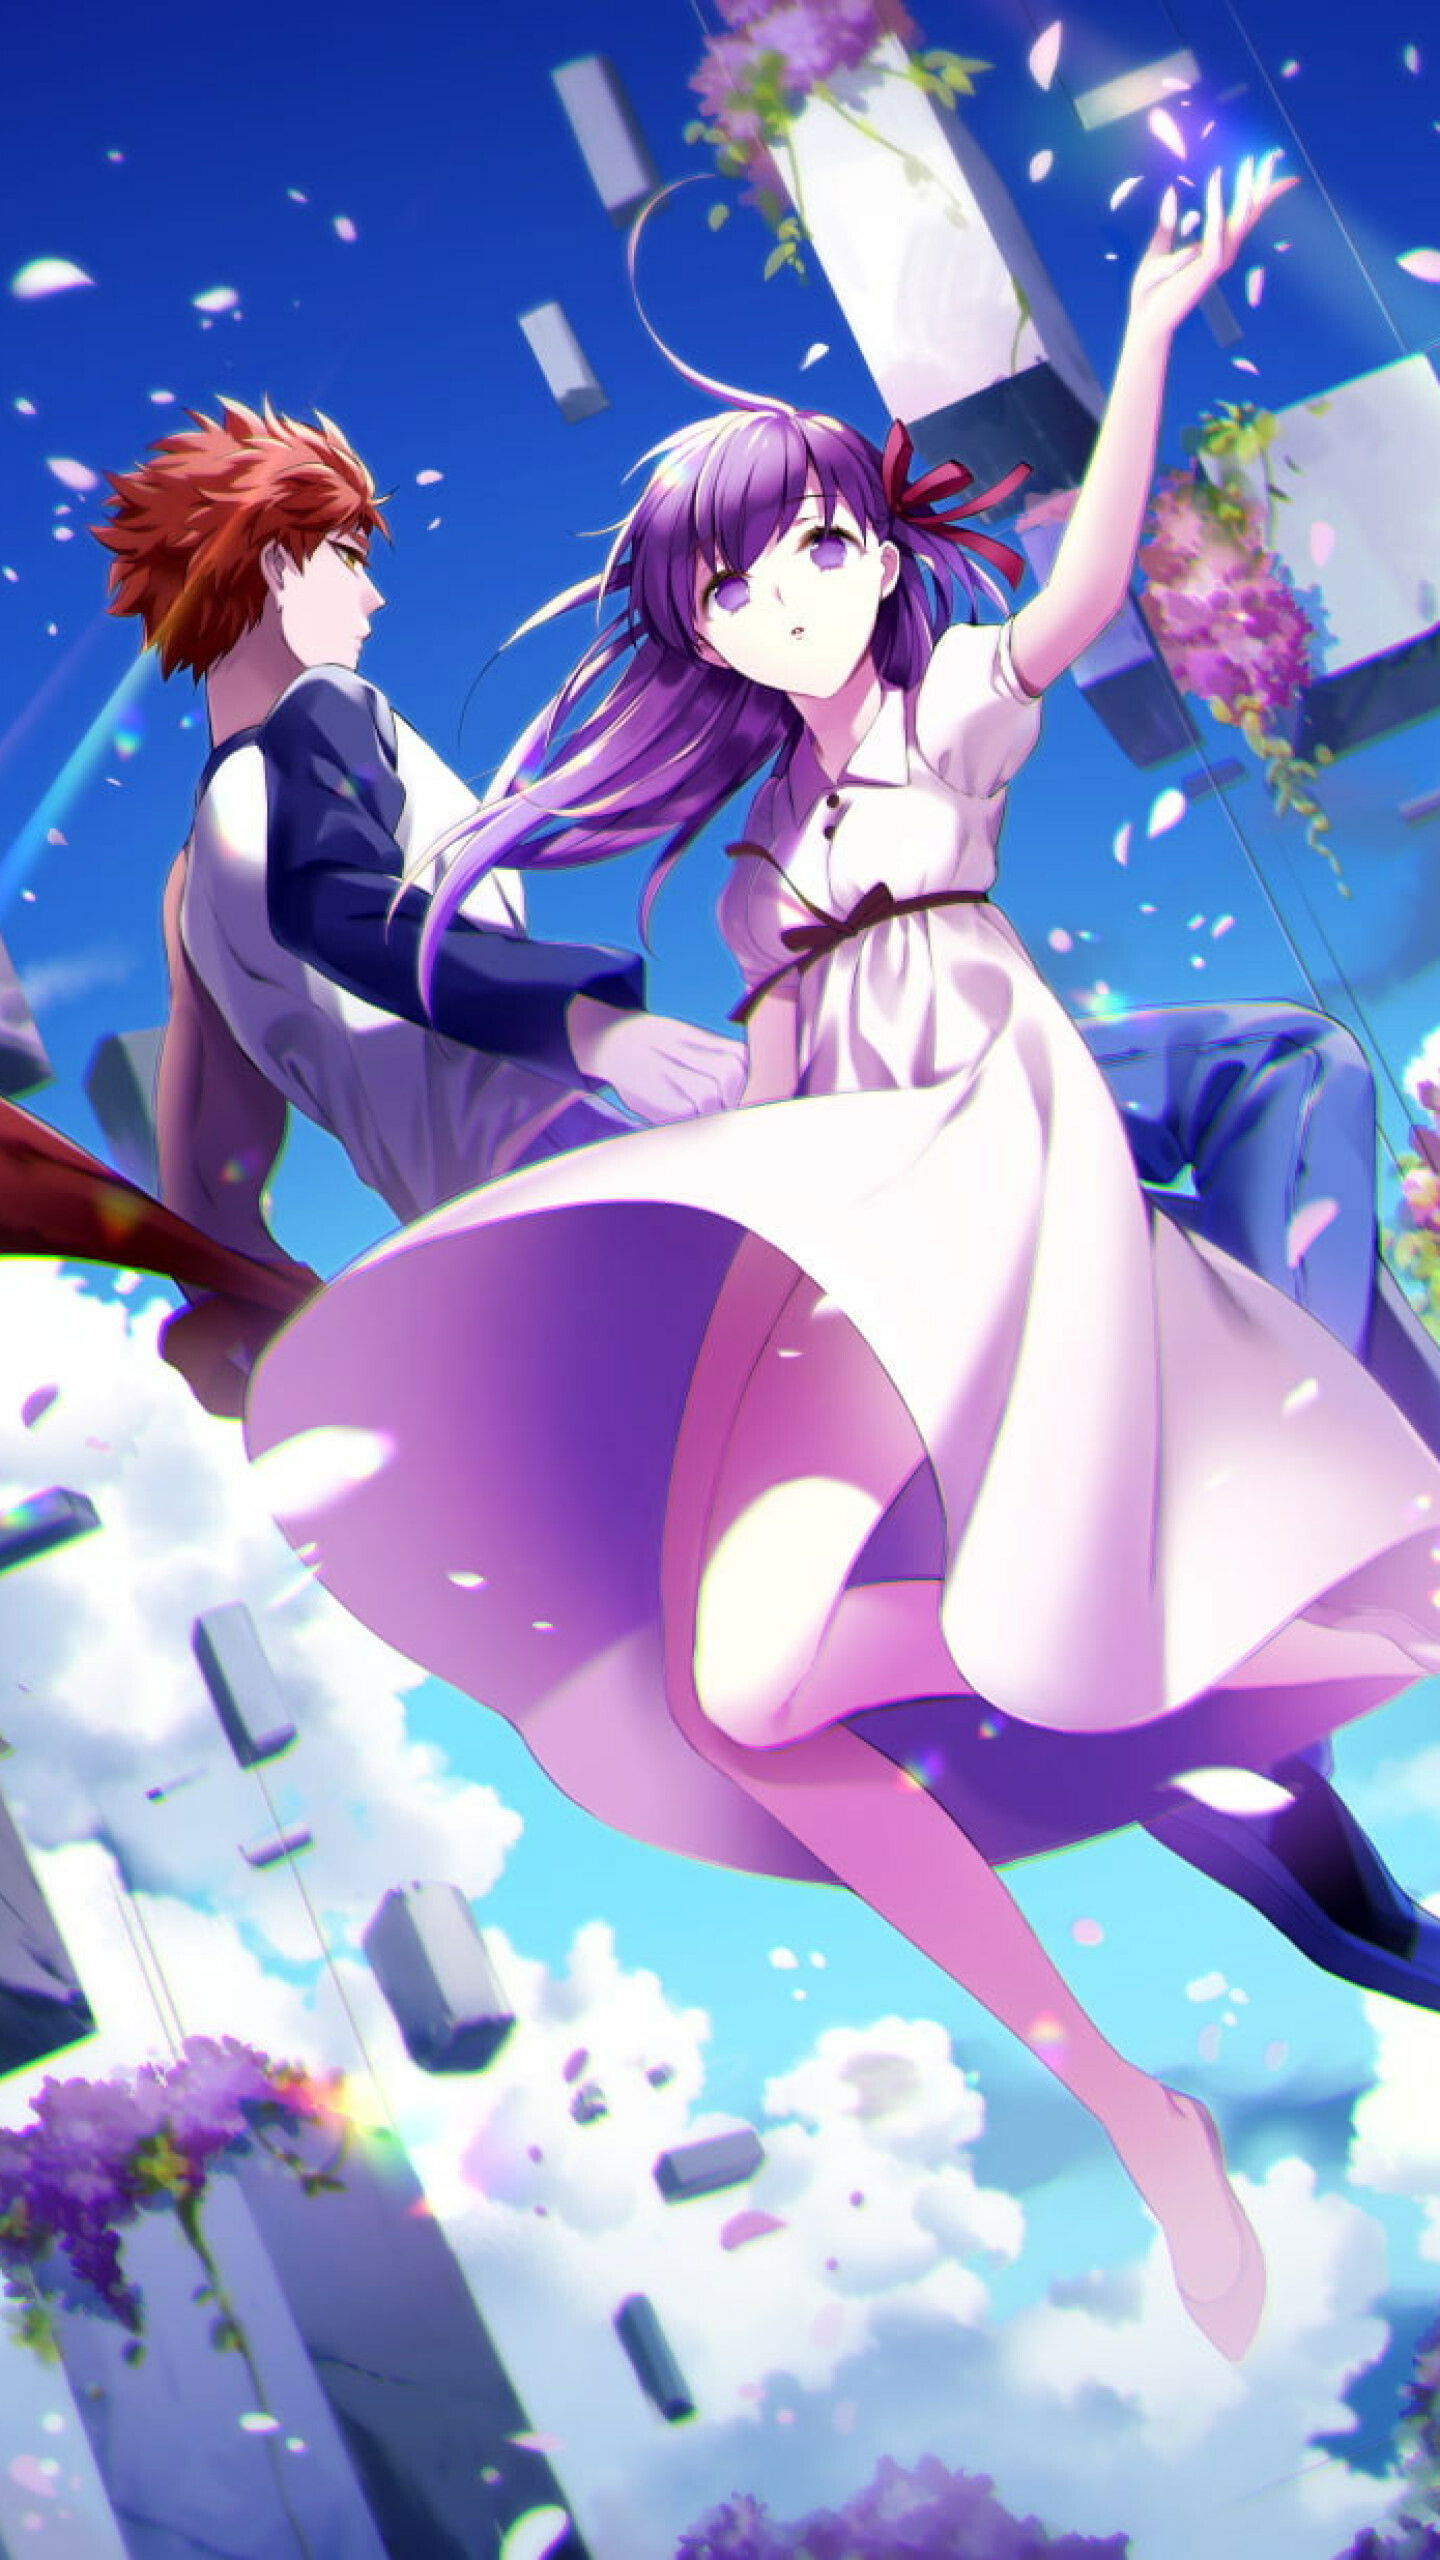 Fate/stay night: Heaven's Feel: Emiya Shirou, A teenage Japanese Magus, Fate series. 1440x2560 HD Wallpaper.